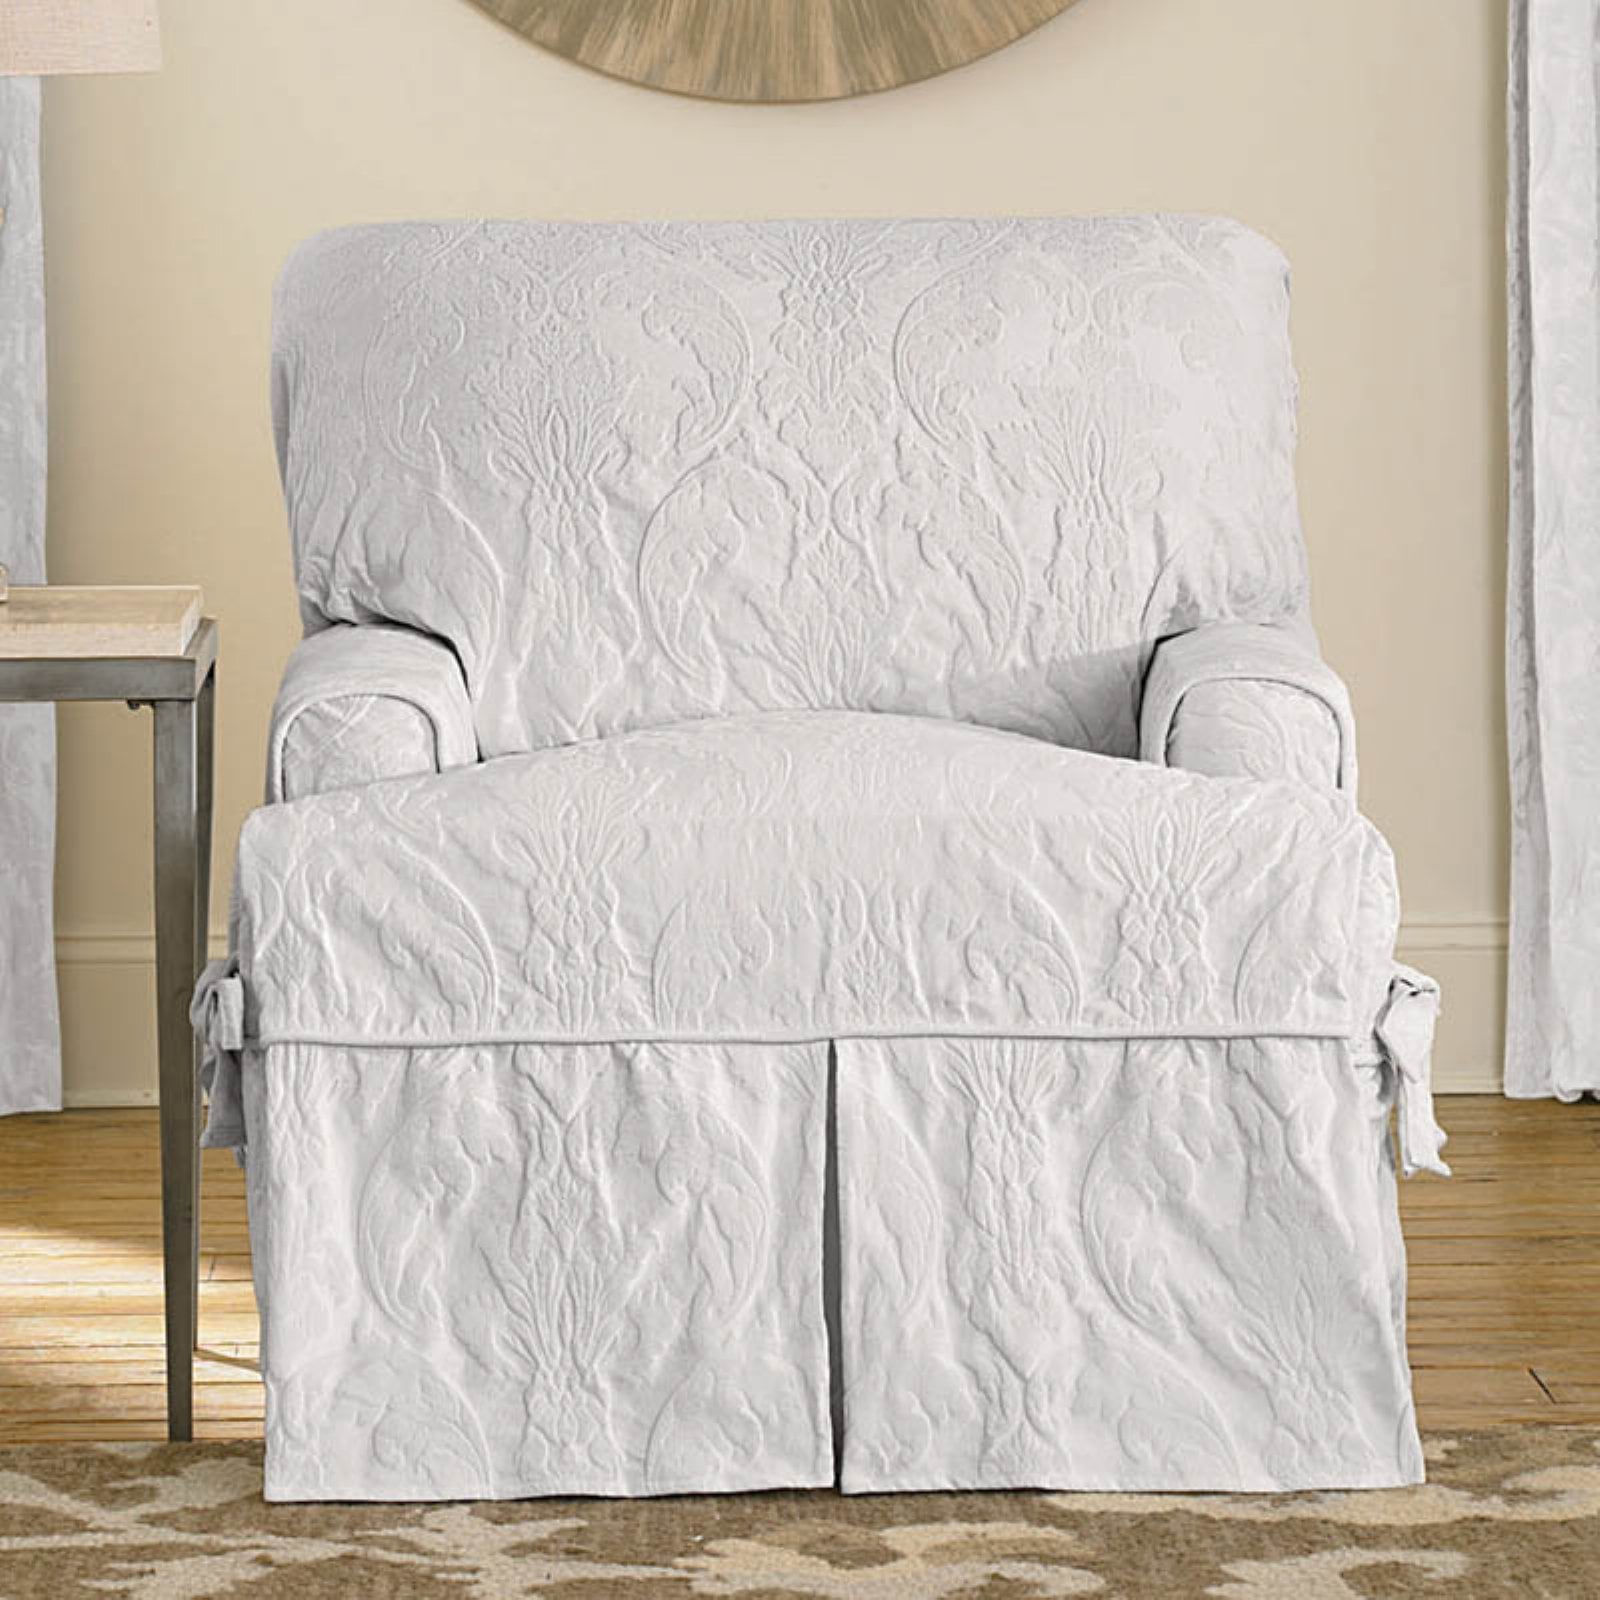 Chair  Grain Sack Slipcover Color Tan/White Sure Fit 1Pc. 